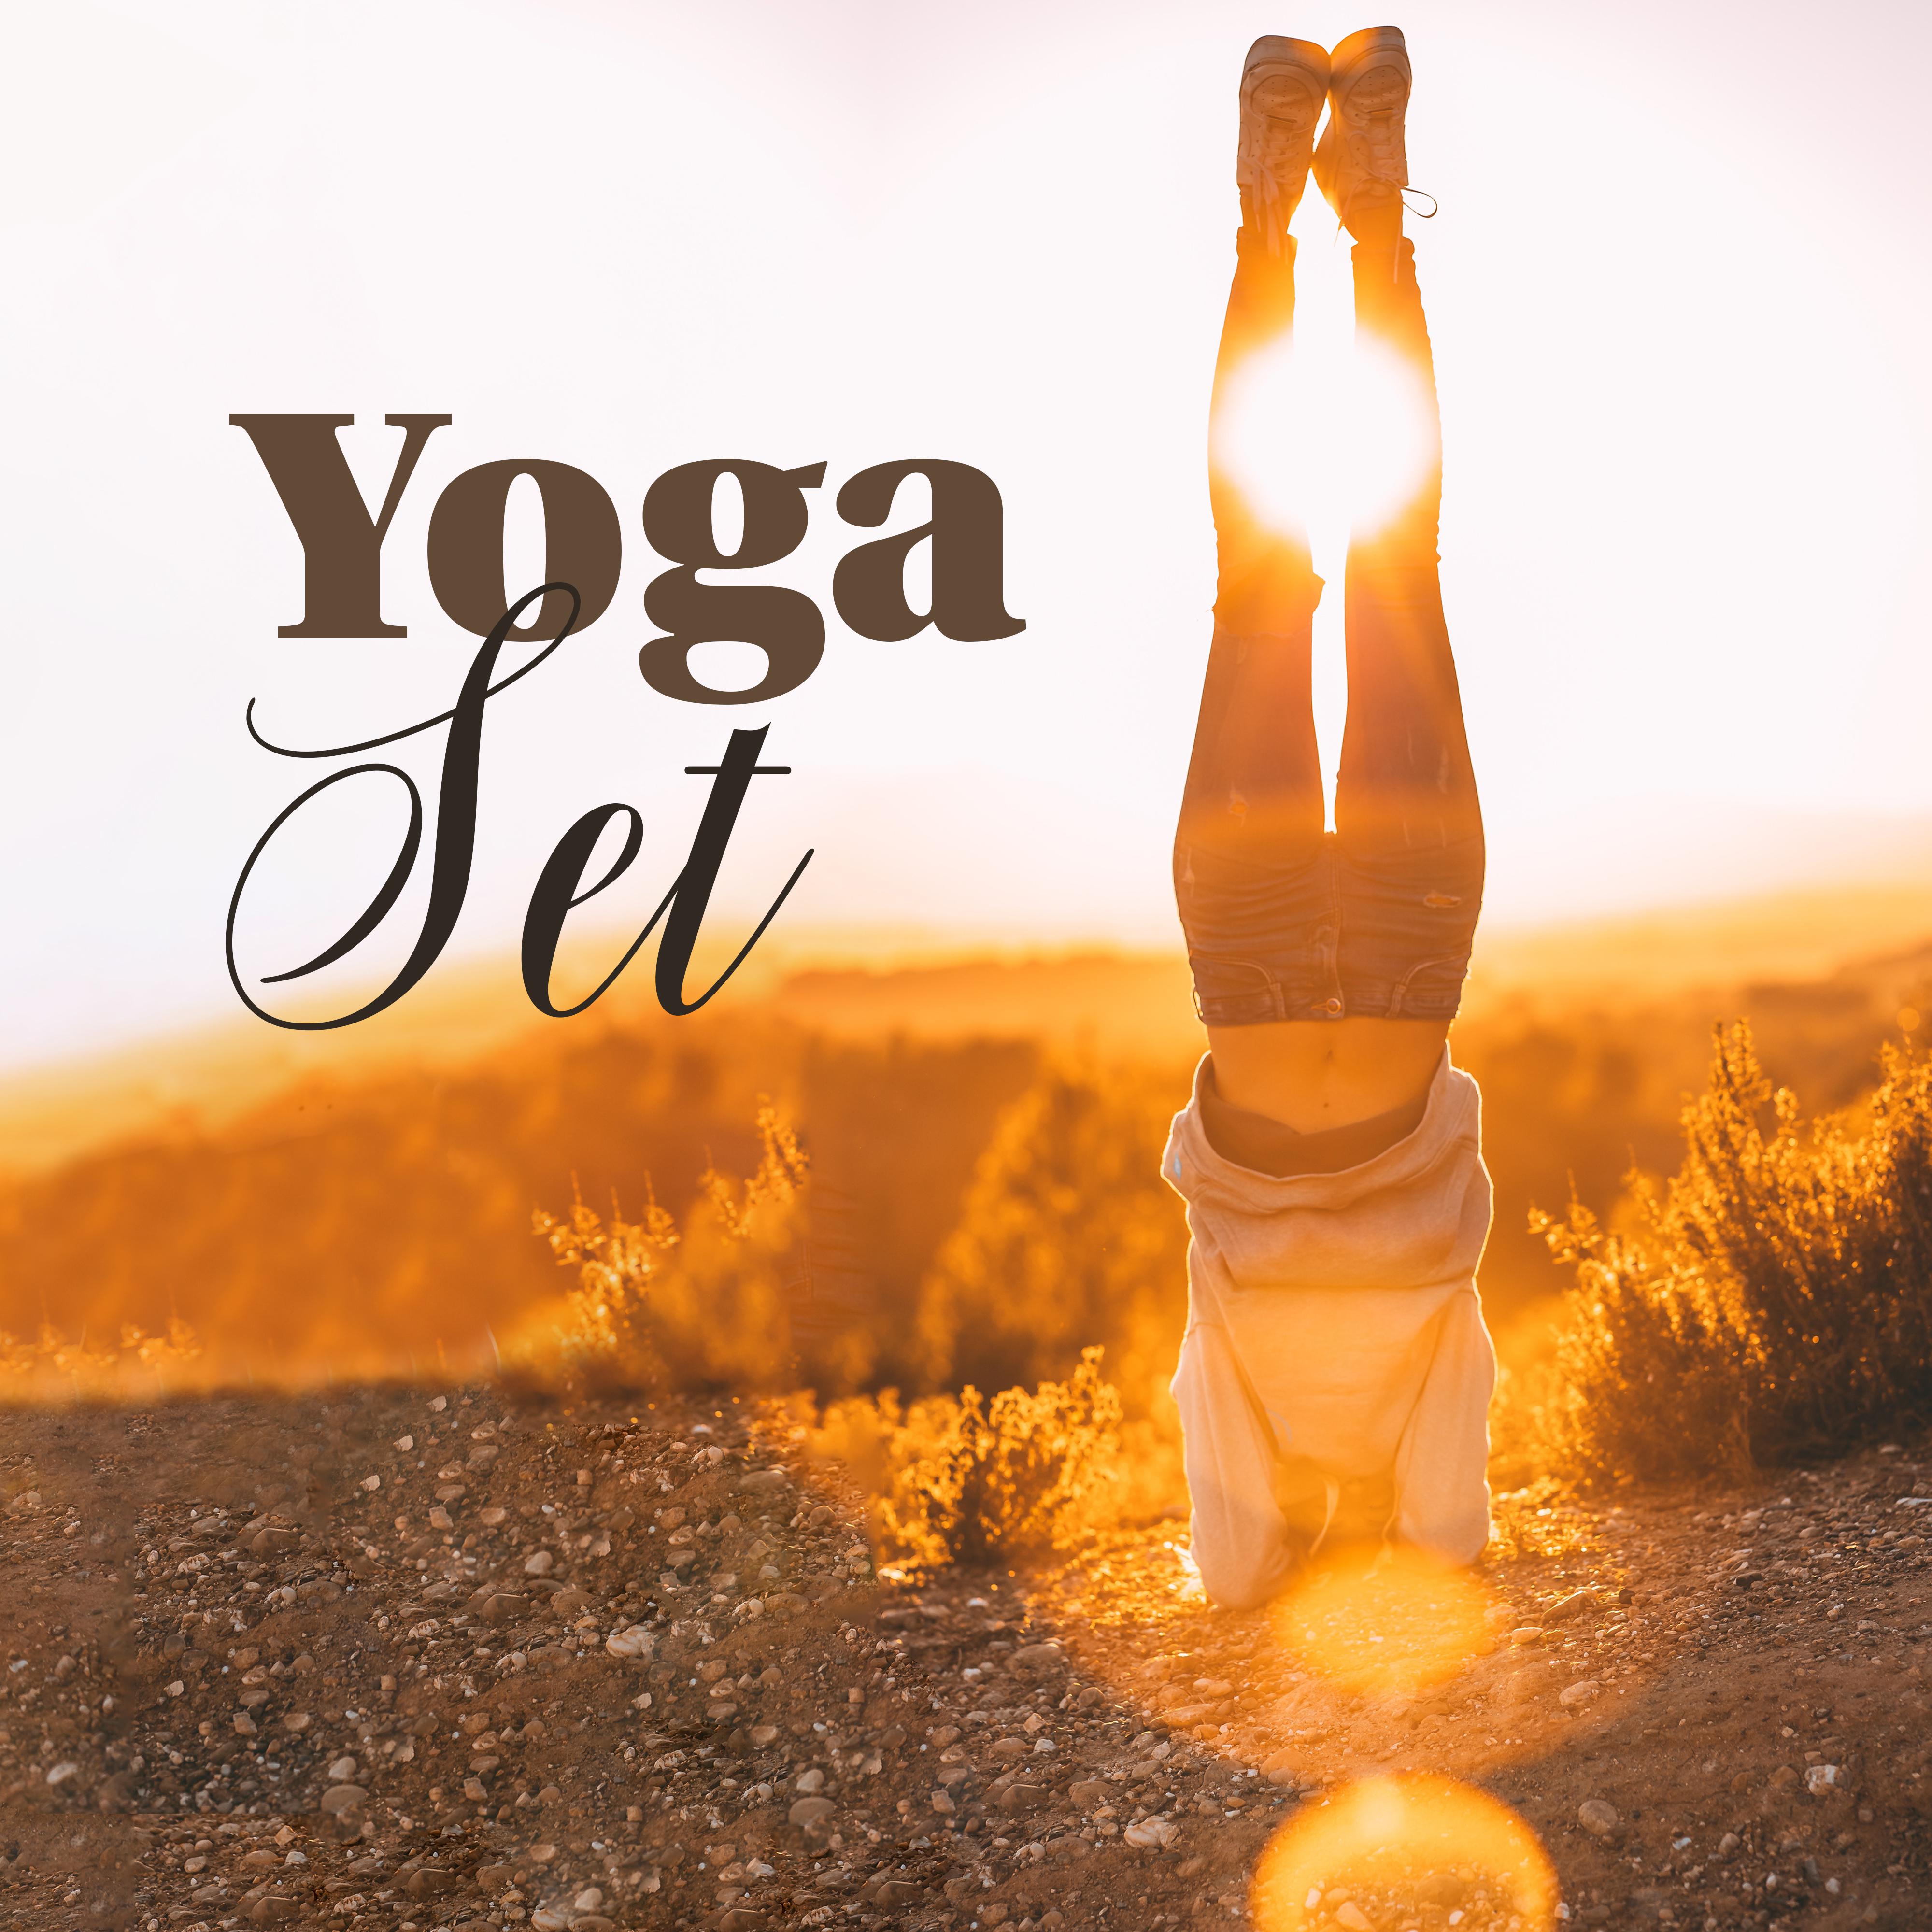 Yoga Set – Nature Sounds for Deep Meditation, Spiritual Harmony, Yoga Meditation, Total Chill, Spiritual Awakening, Blissful Songs for Meditation, Zen